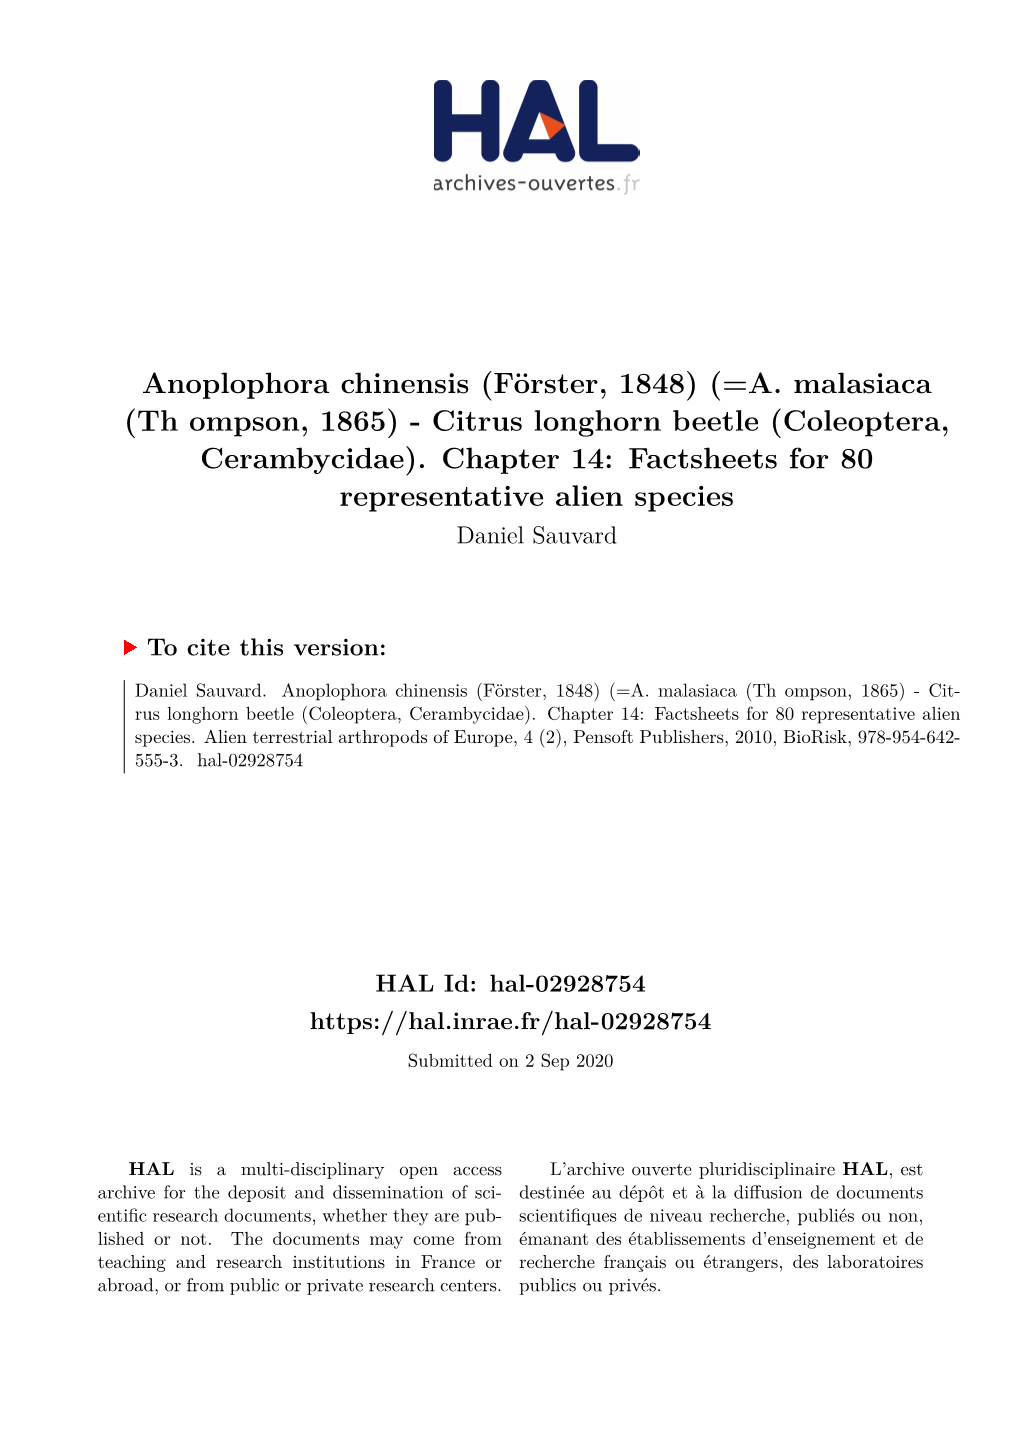 Anoplophora Chinensis (Förster, 1848) (=A